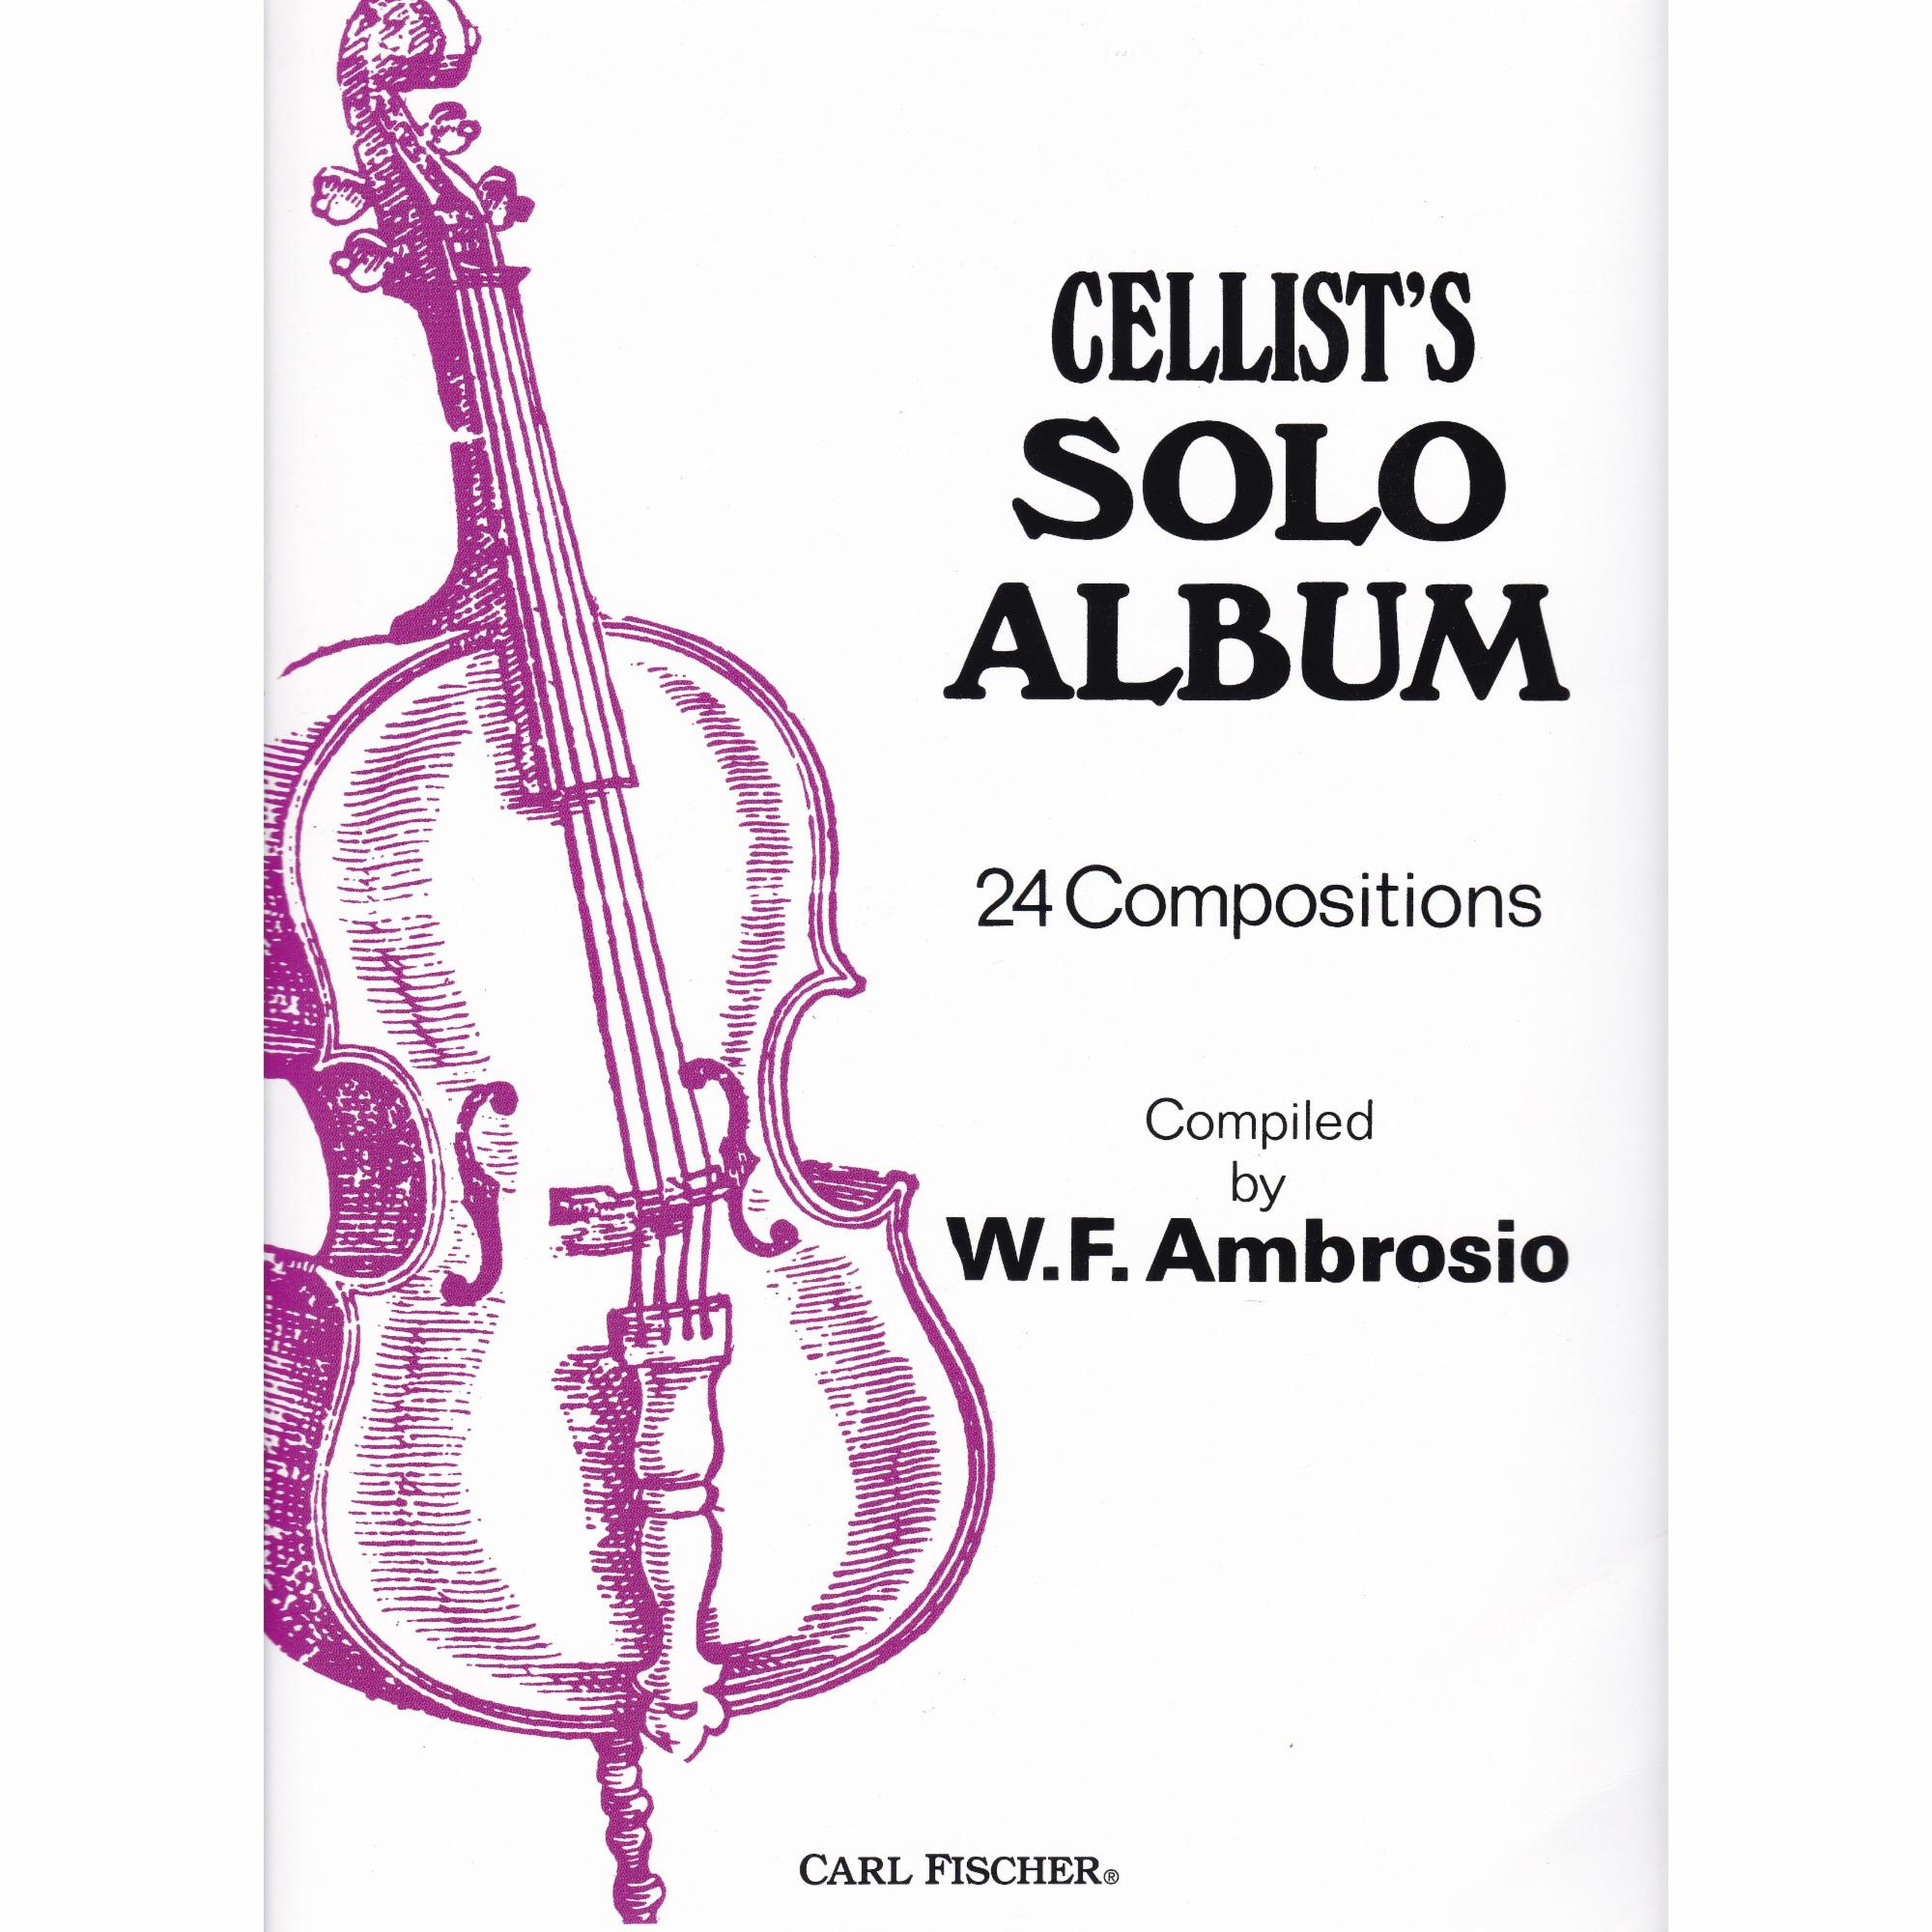 The Cellist's Solo Album